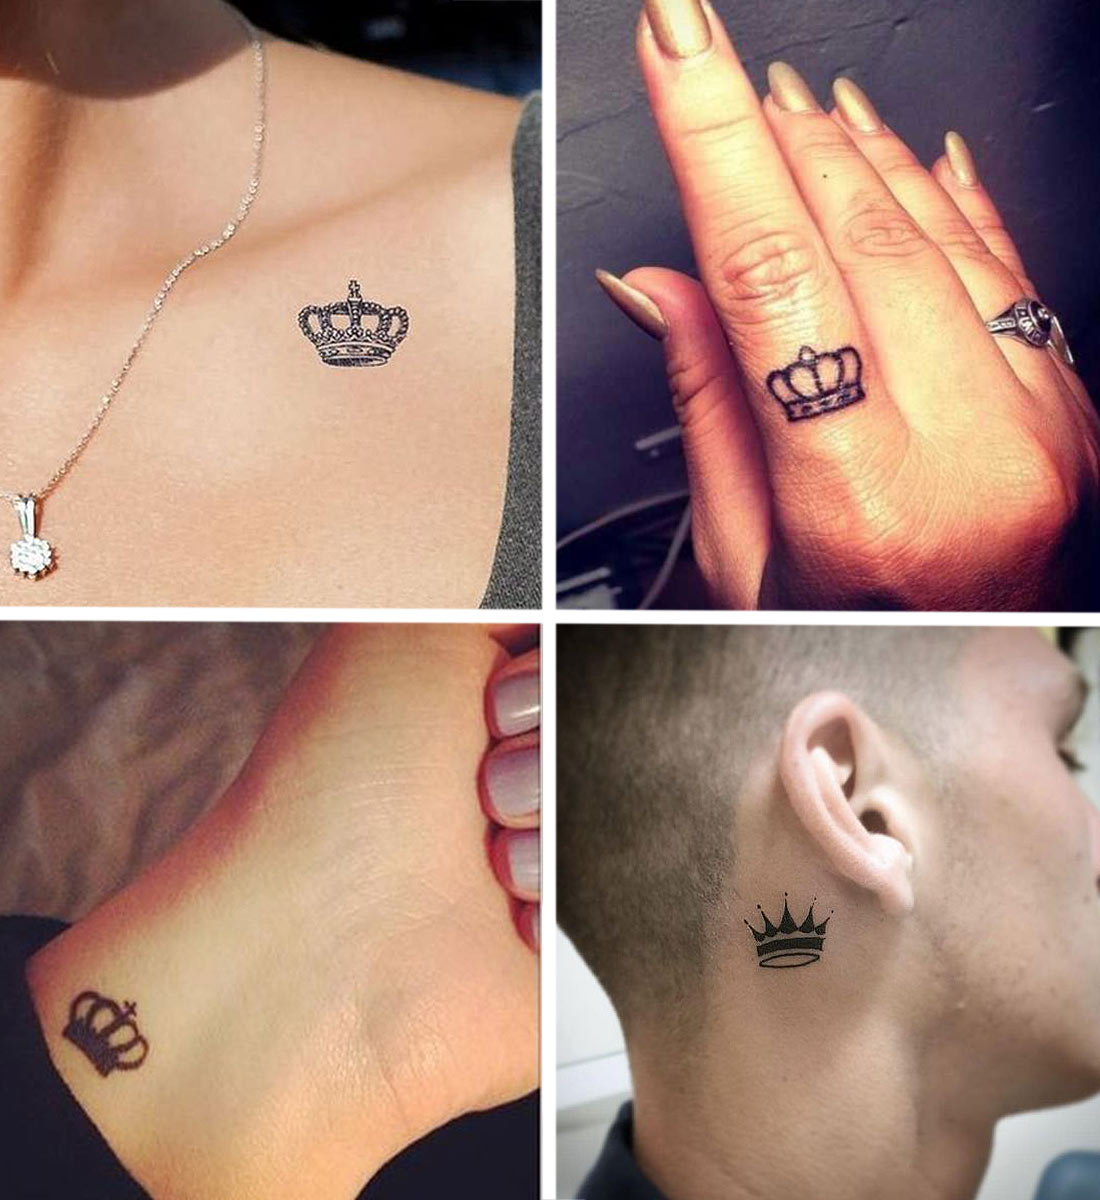 Black King Of Hearts Temporary Tattoo - Set of 3 – Small Tattoos